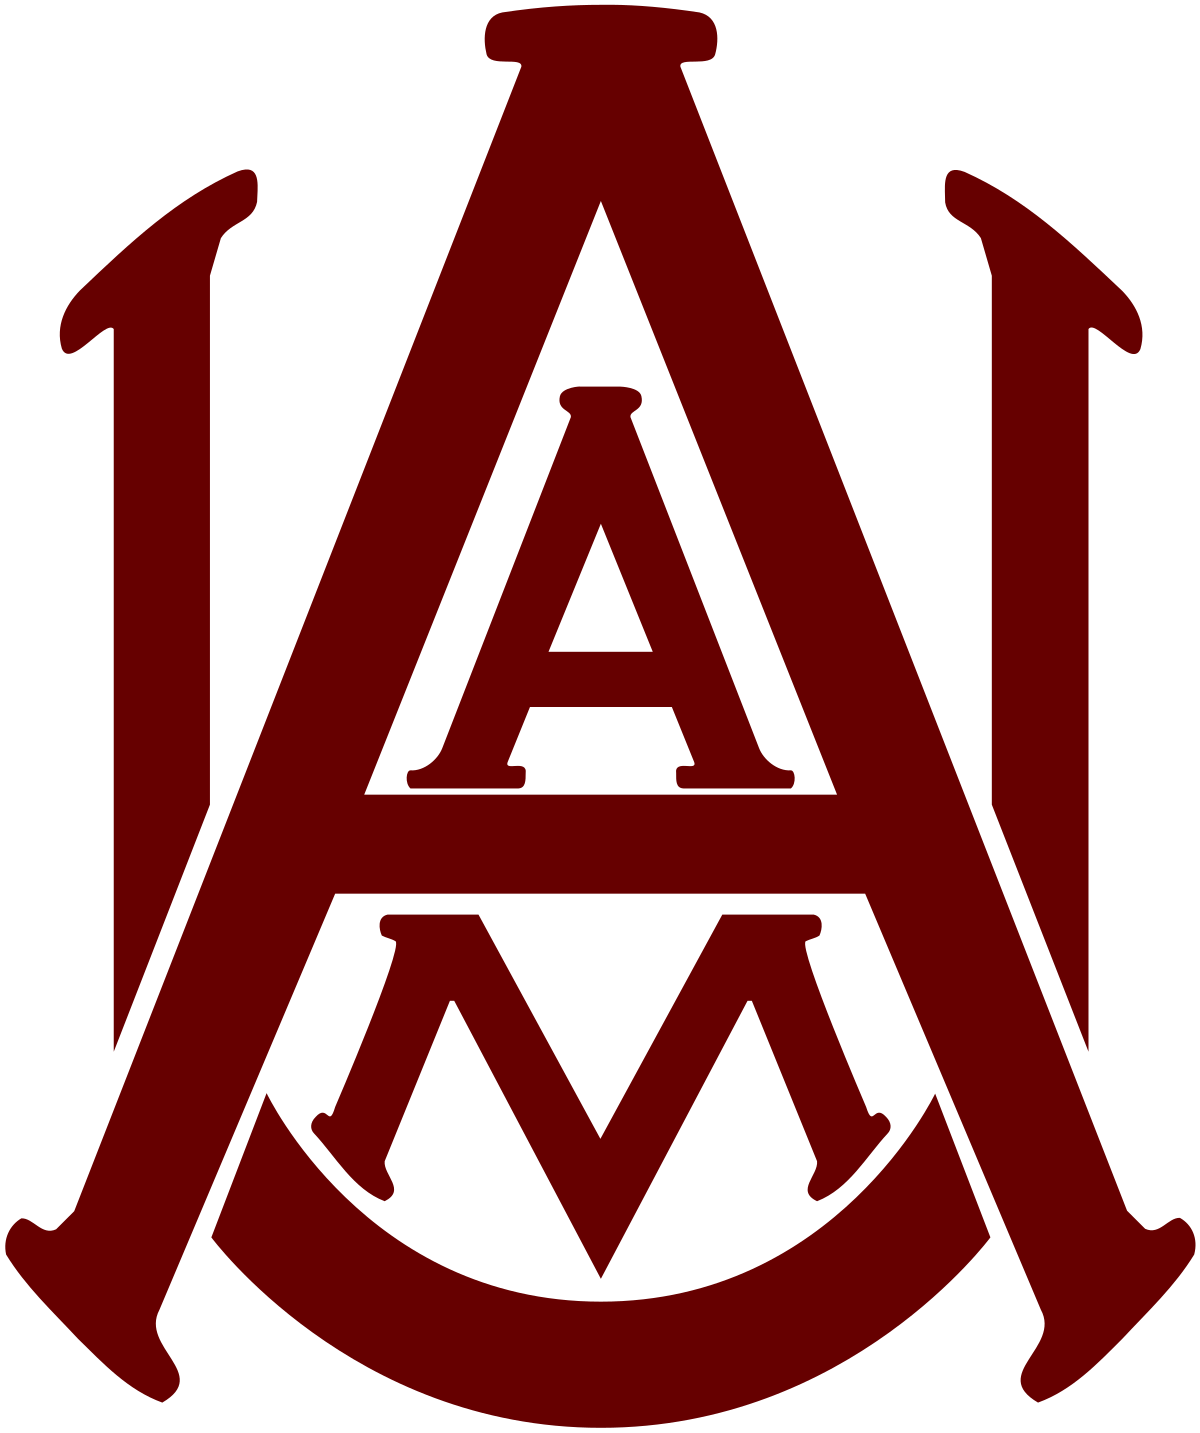 Alabama Agricultural and Mechanical University logo